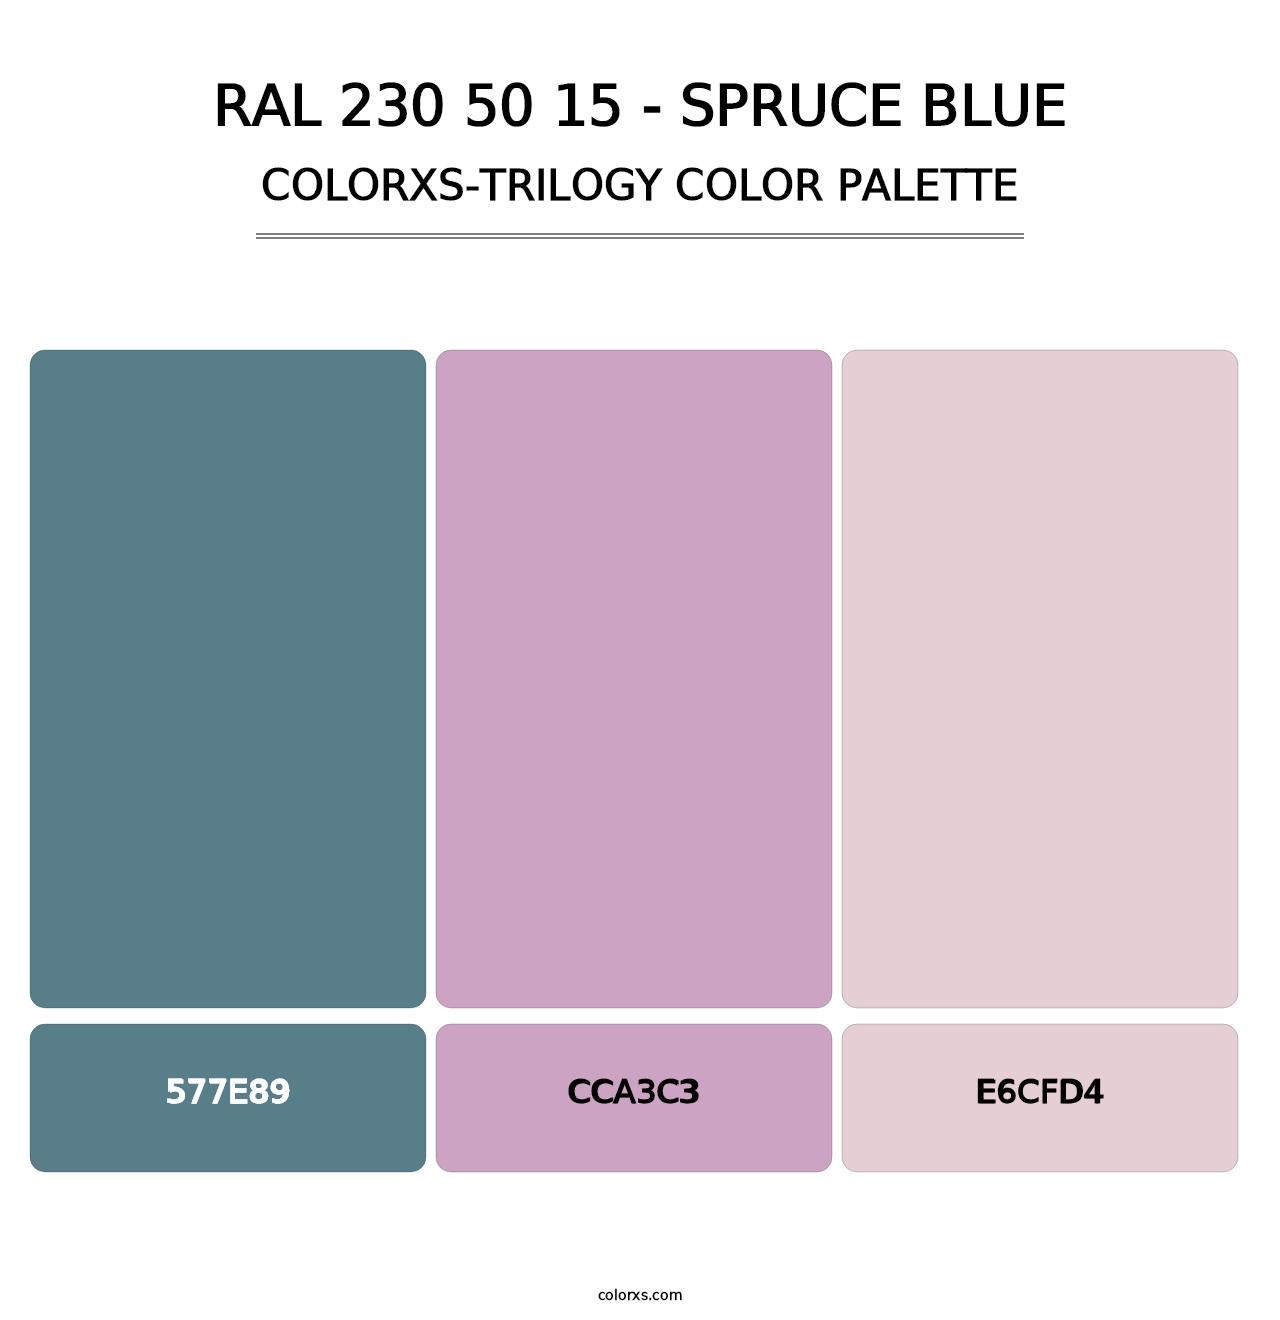 RAL 230 50 15 - Spruce Blue - Colorxs Trilogy Palette